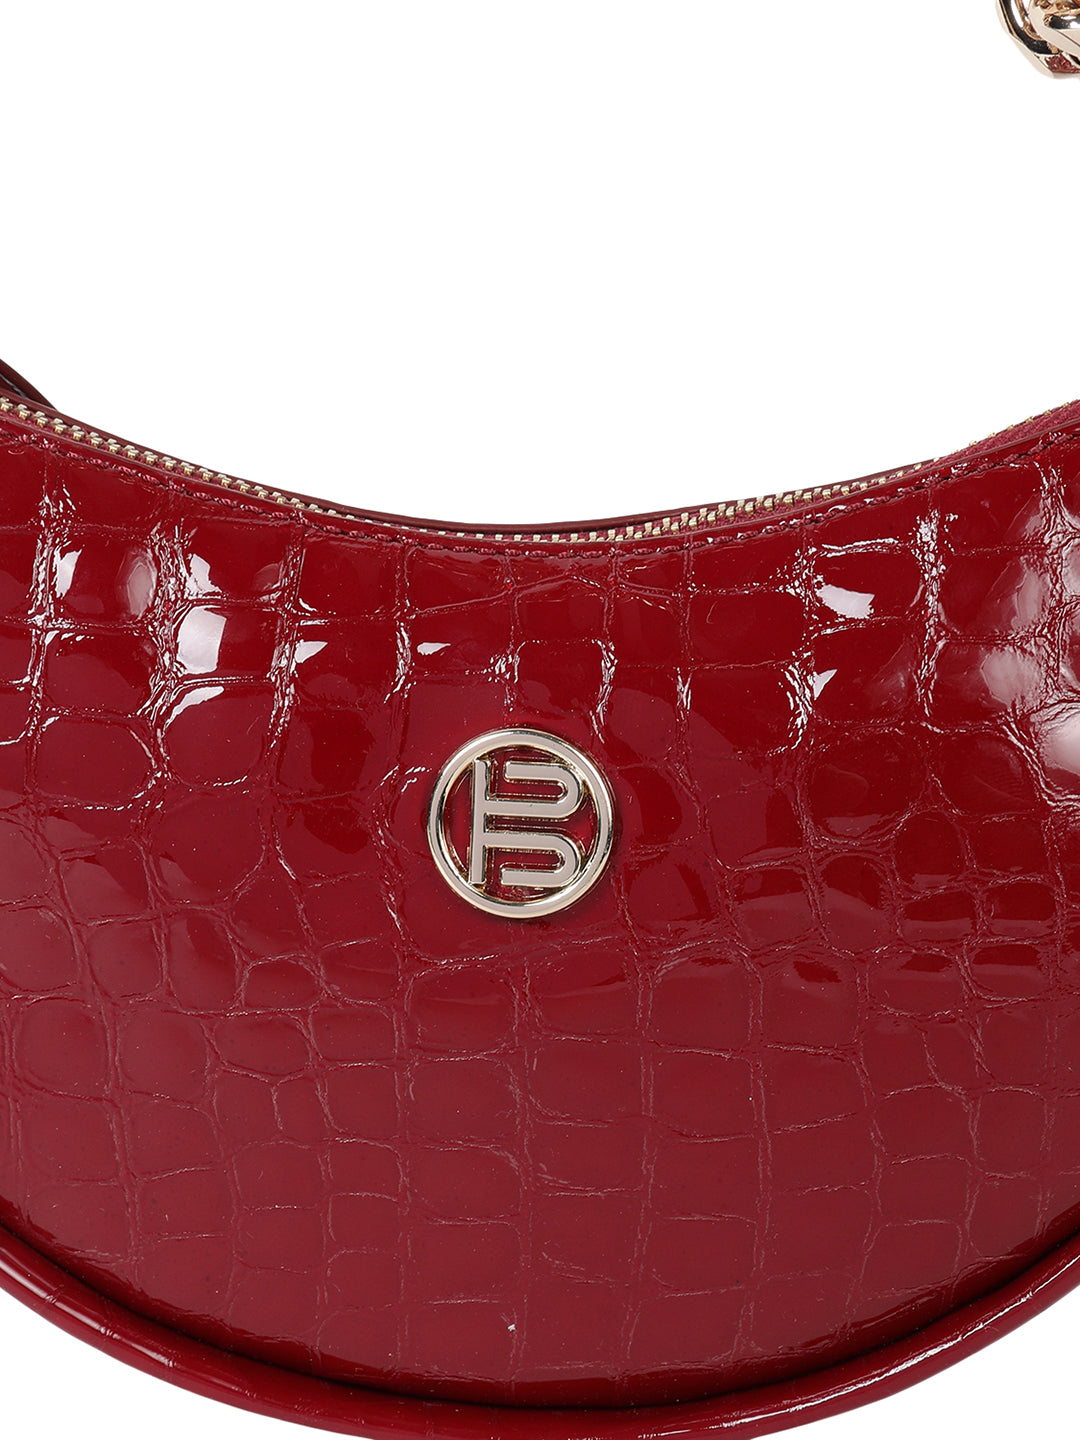 Barletta Red Leather Wristlet